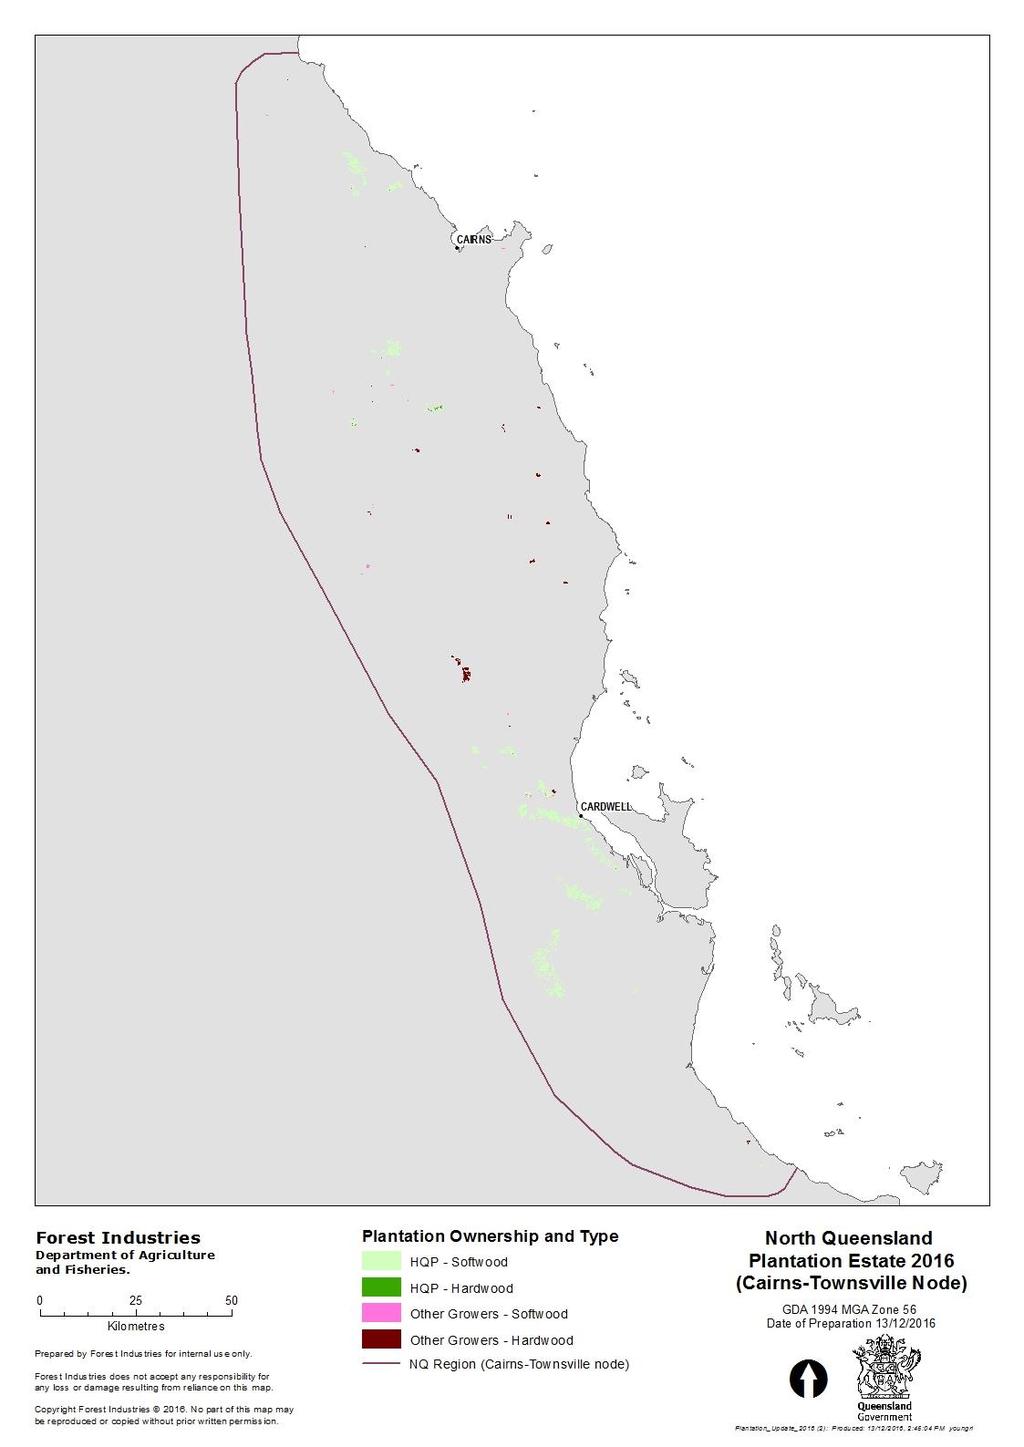 Appendix 2: North Queensland Plantation Estate maps Figure 1 North Queensland Plantation Estate 2016 (Cairns